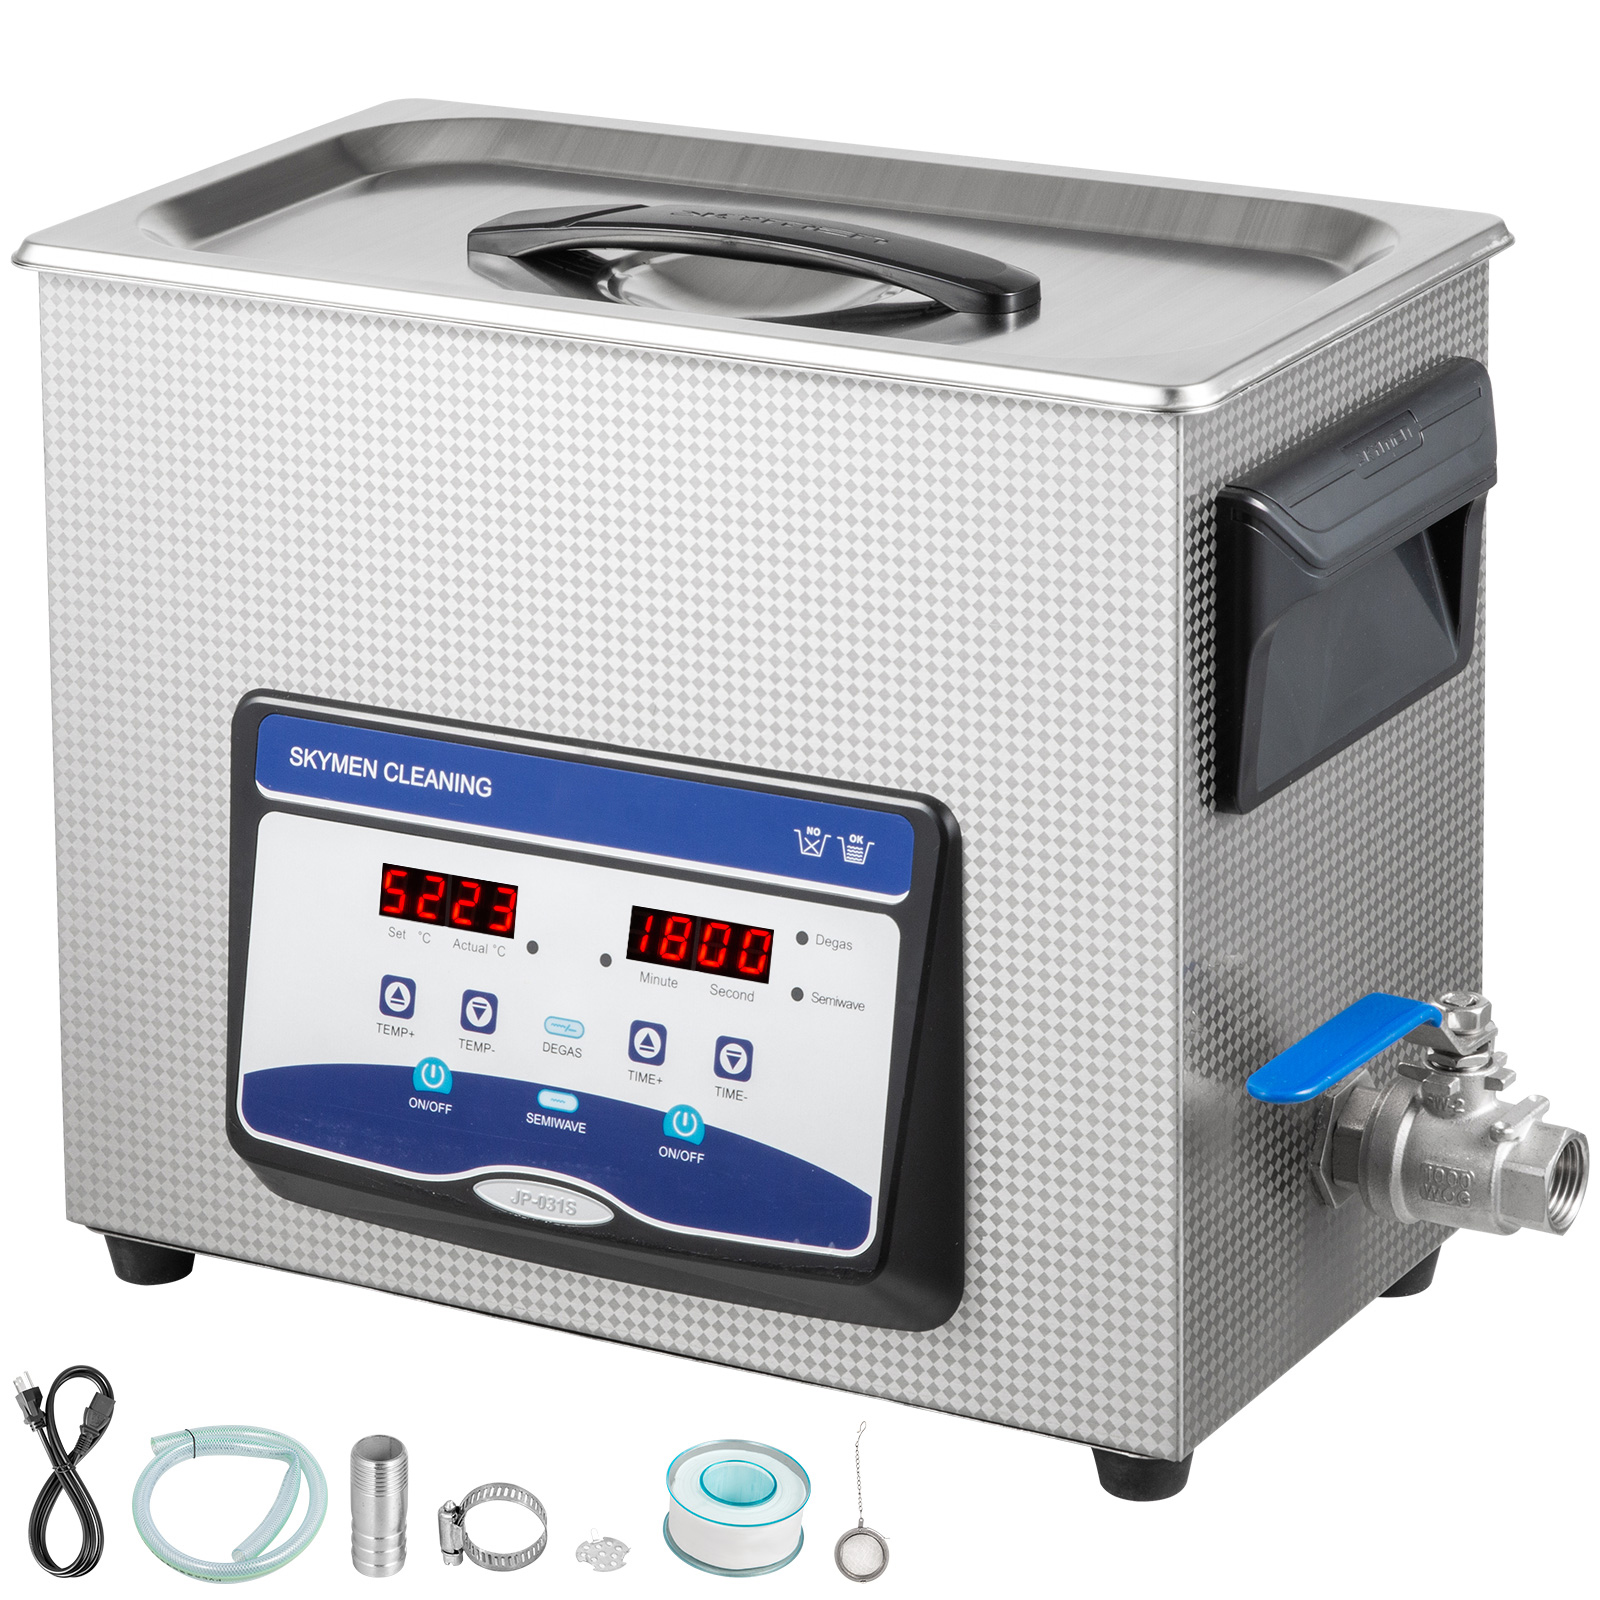 Nettoyeur ultrasons 6.5 litres avec chauffage